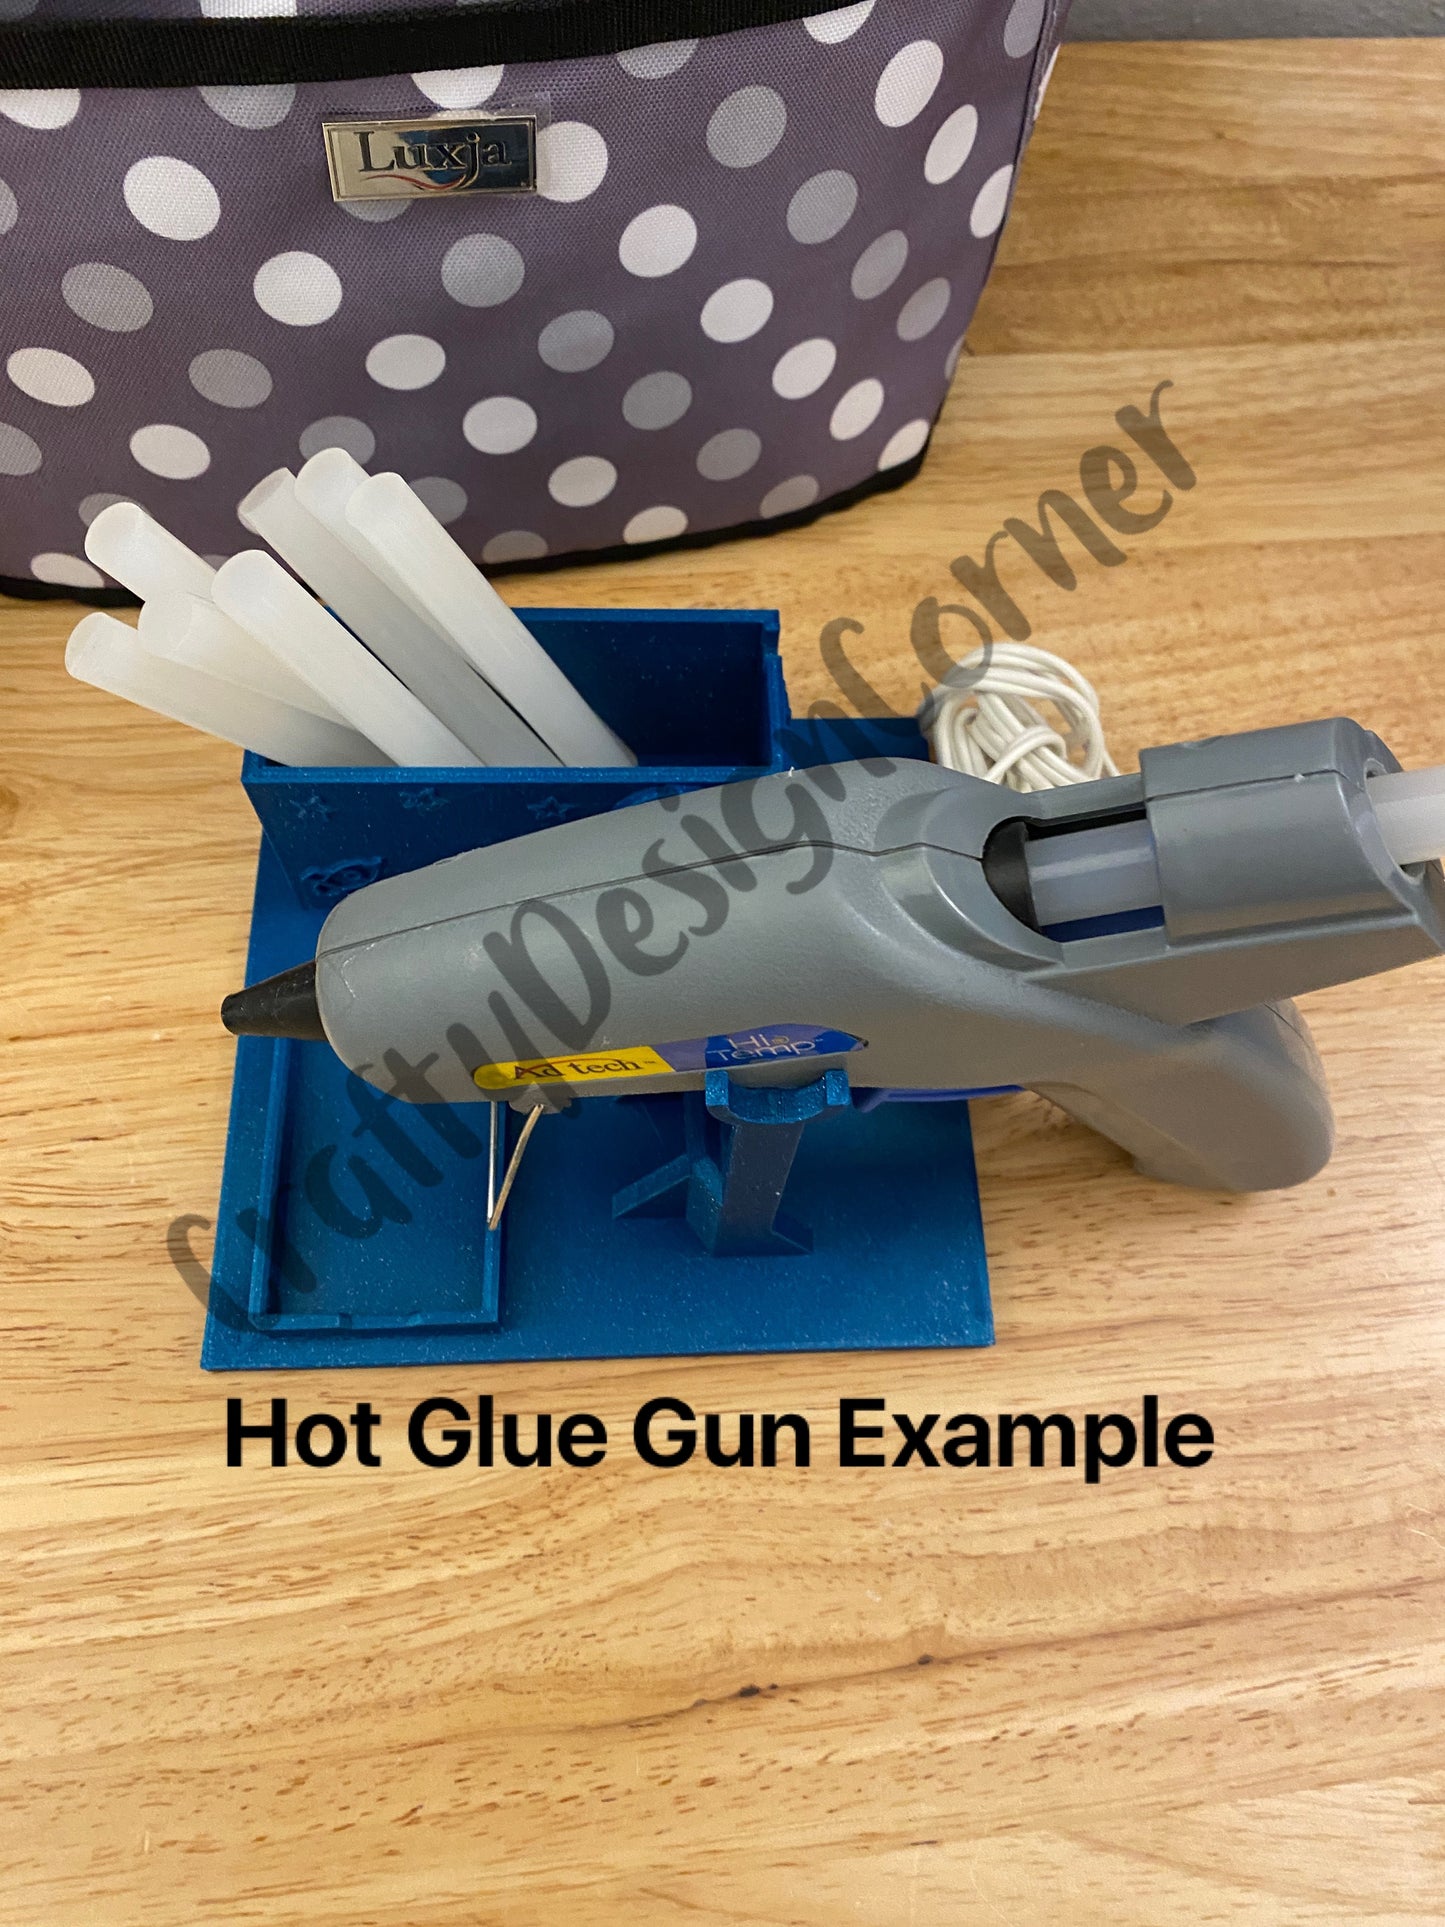 Regular Hot Glue Gun Holder, Hot Glue Tool Kit, Bundle Kit Glue Gun with holder, crafting gift, crafting bundle, Hot Glue Gun Holder stand